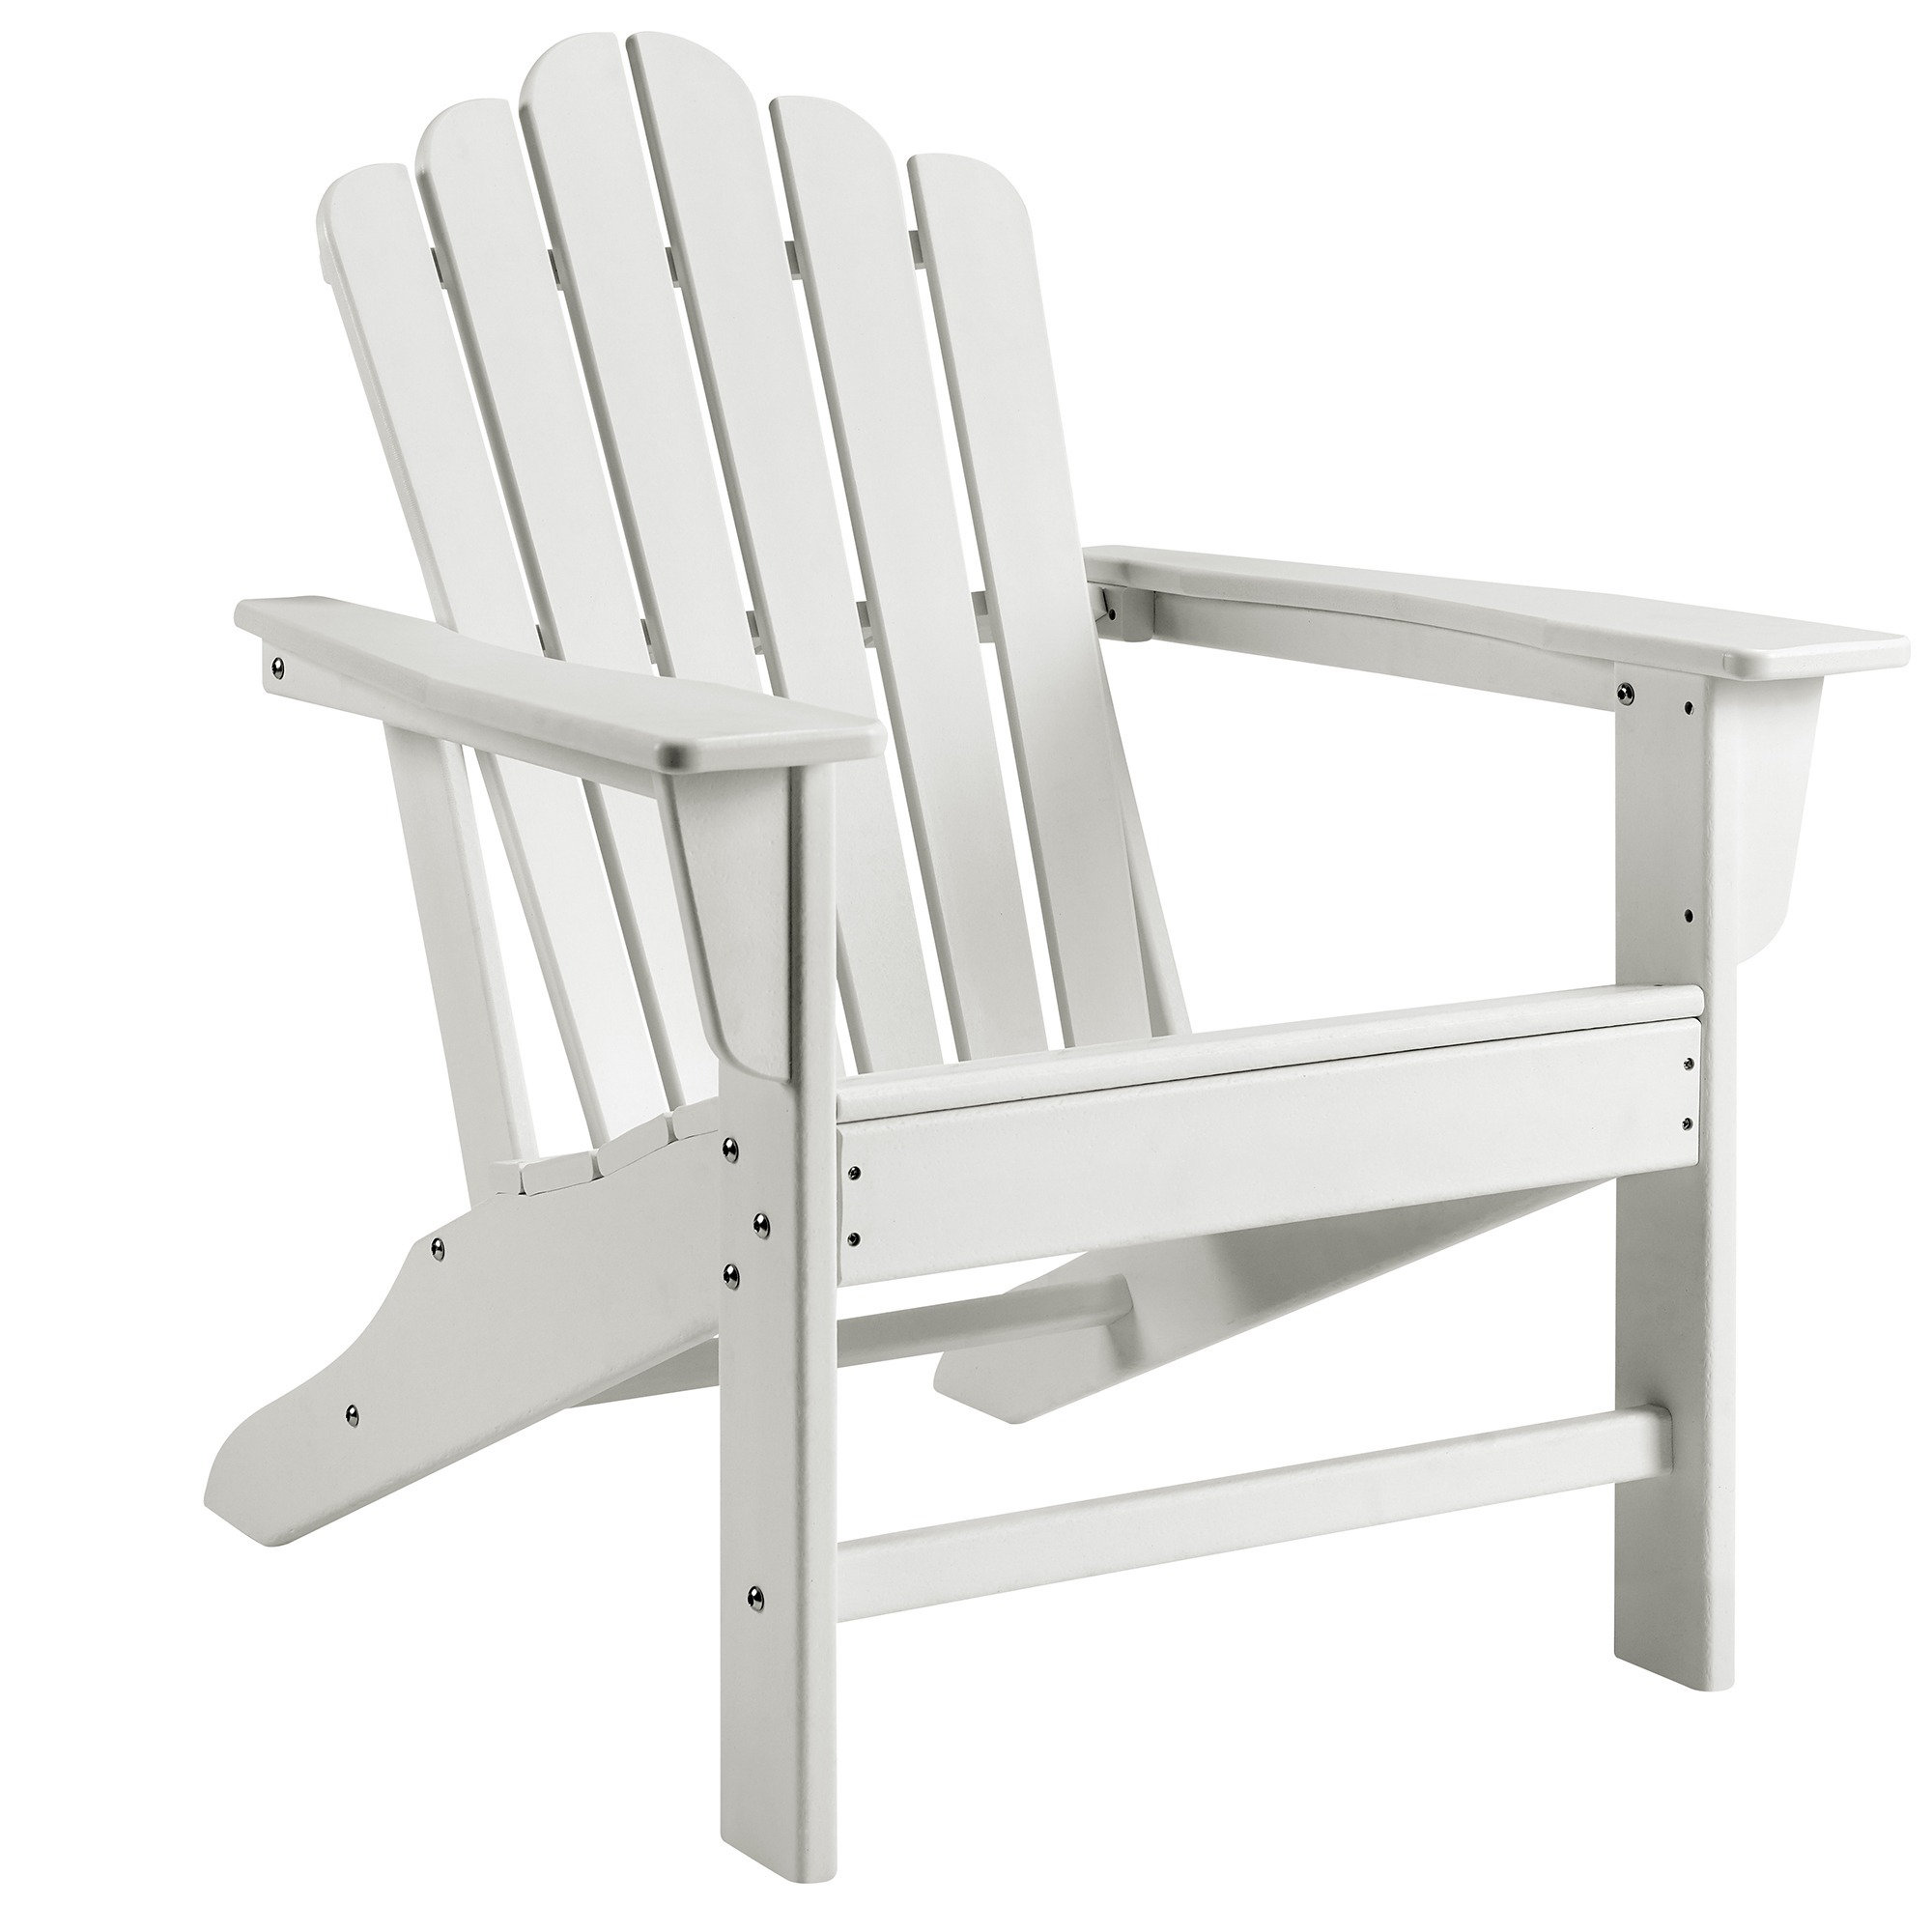 Details about   Adirondack Chair Solid Wood Ergonomic Seat Durable Outdoor Garden Deck Furniture 